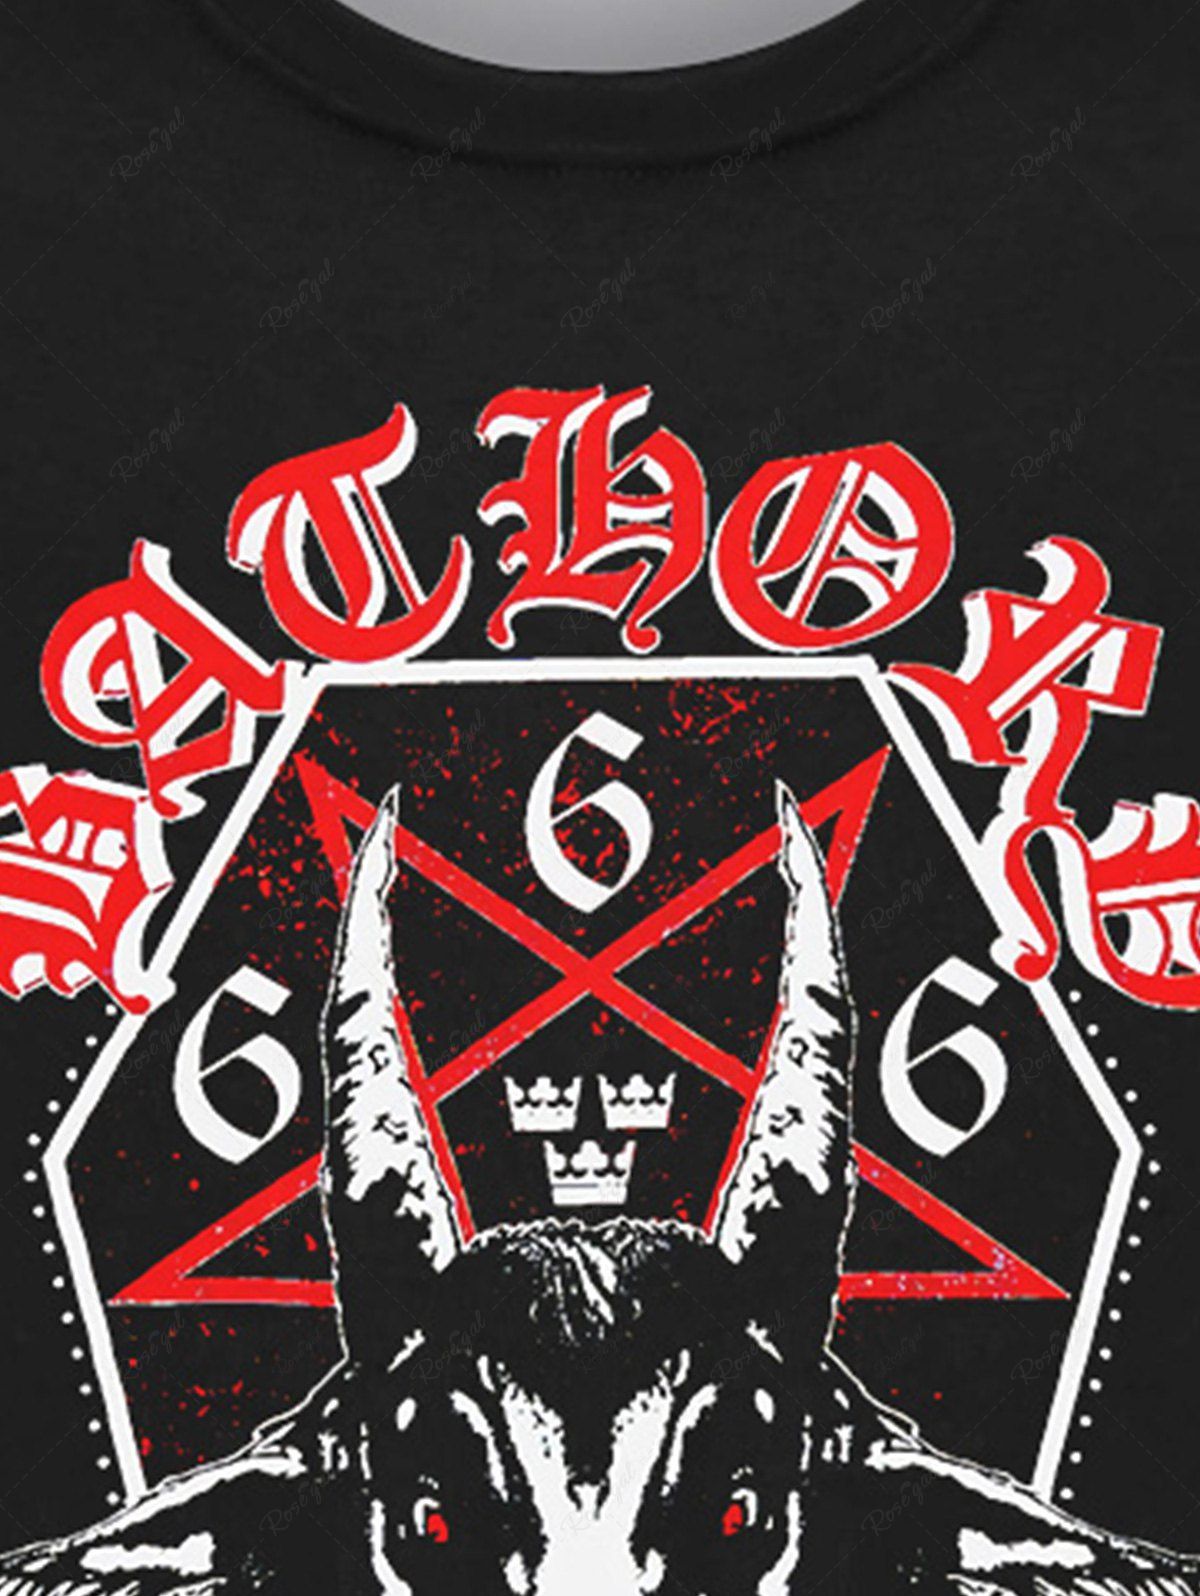 Gothic Sheep Head Star Cross Letters Print T-shirt For Men